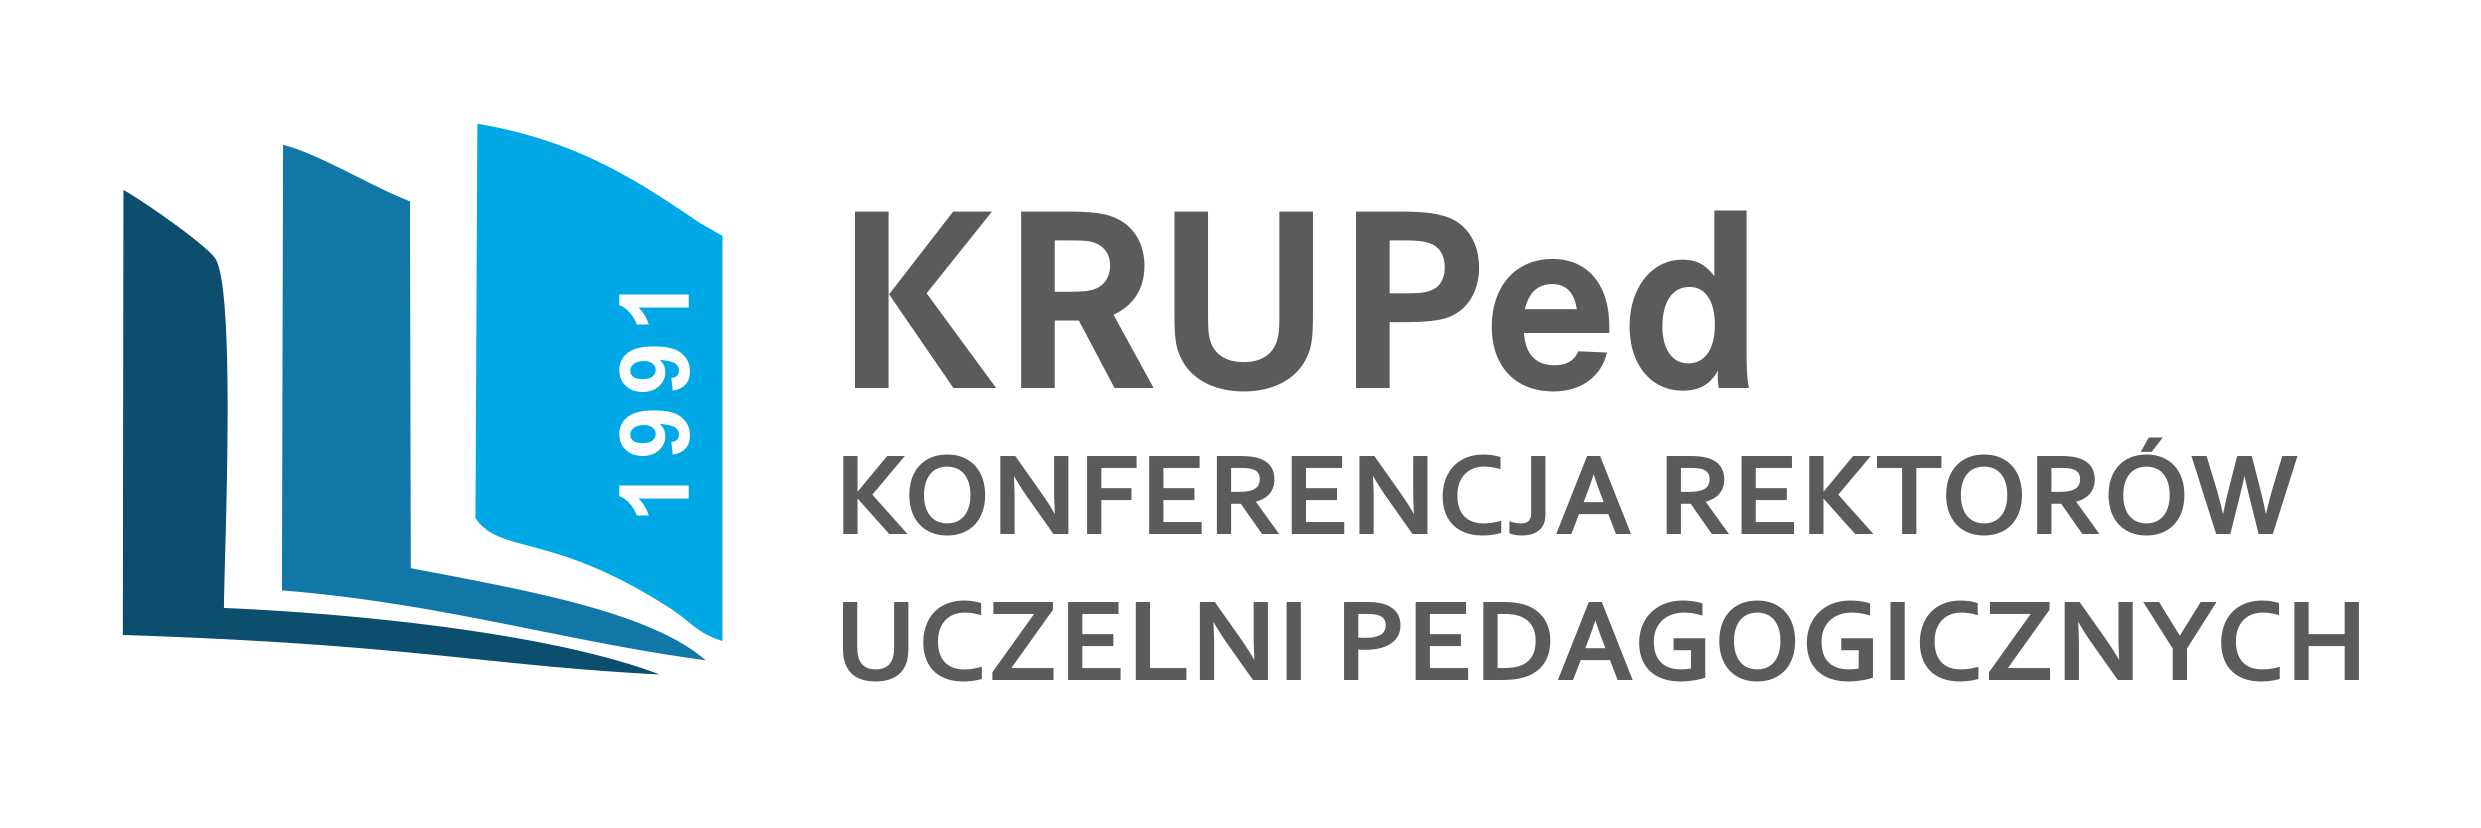 element graficzny - logo Kruped